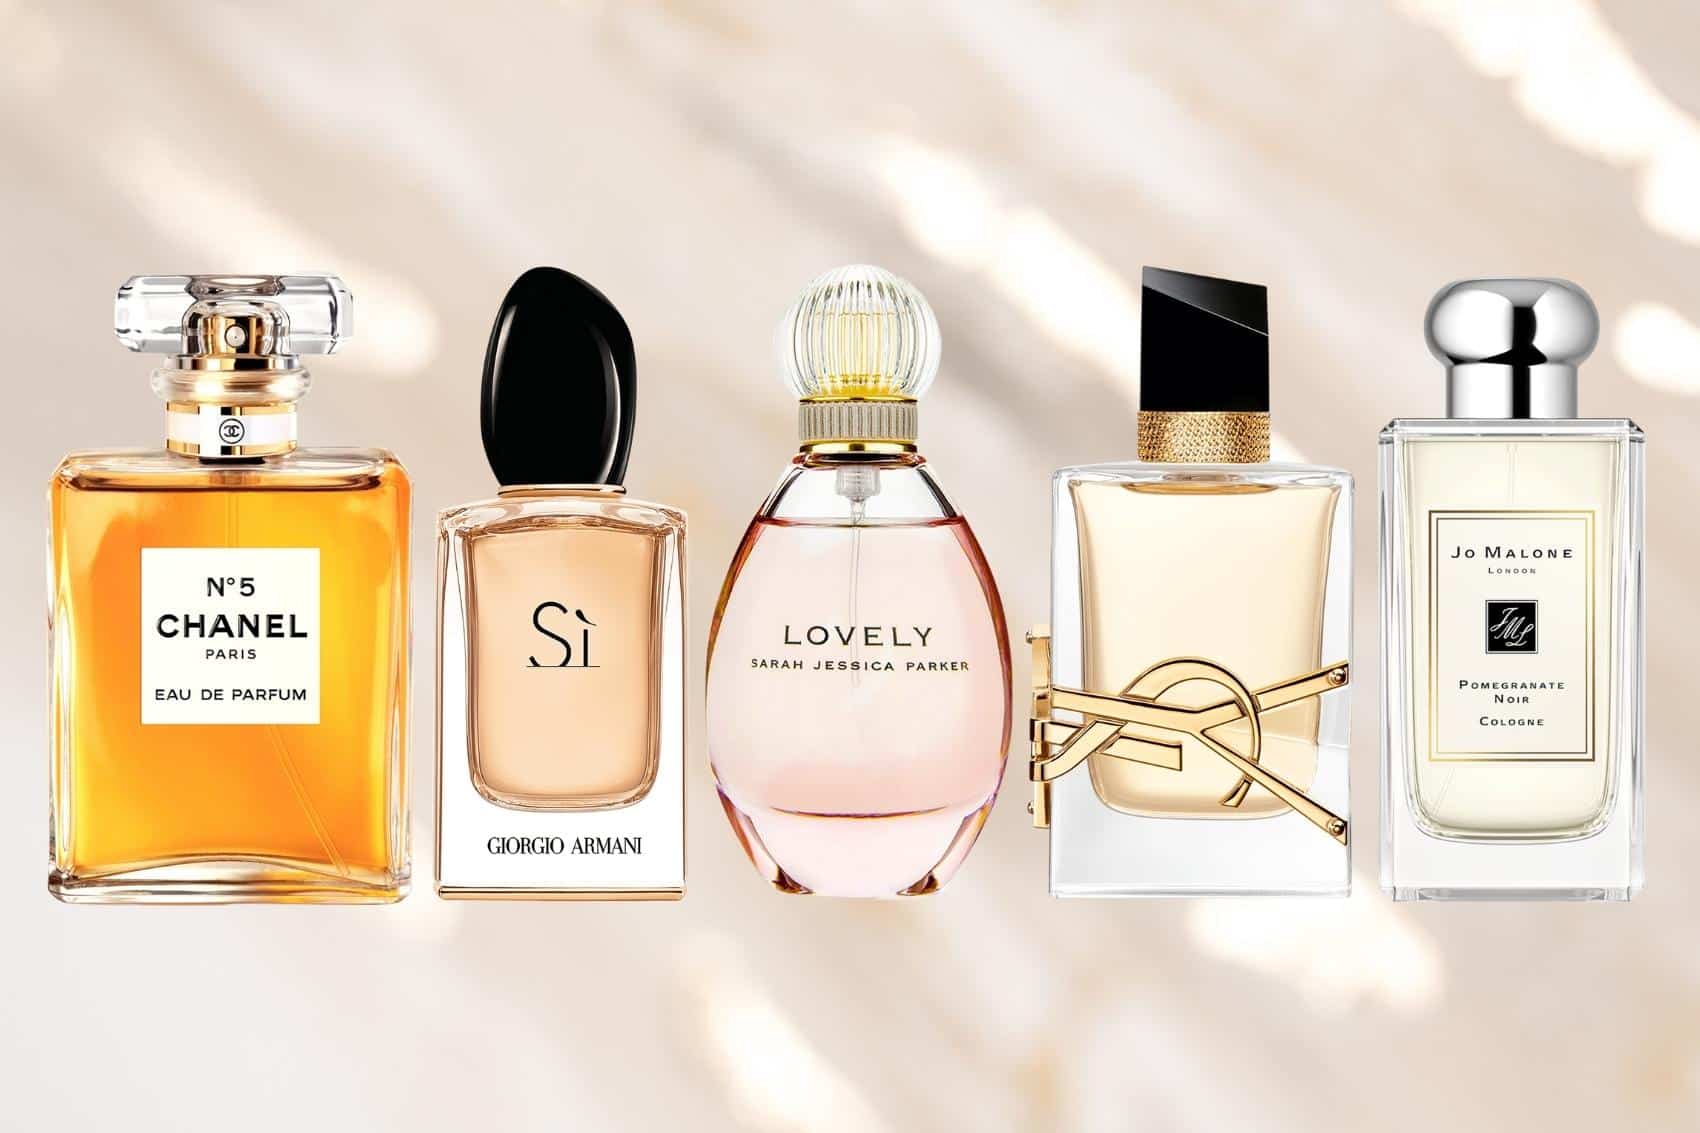 Nebras Perfume  : Discover Exquisite Fragrances